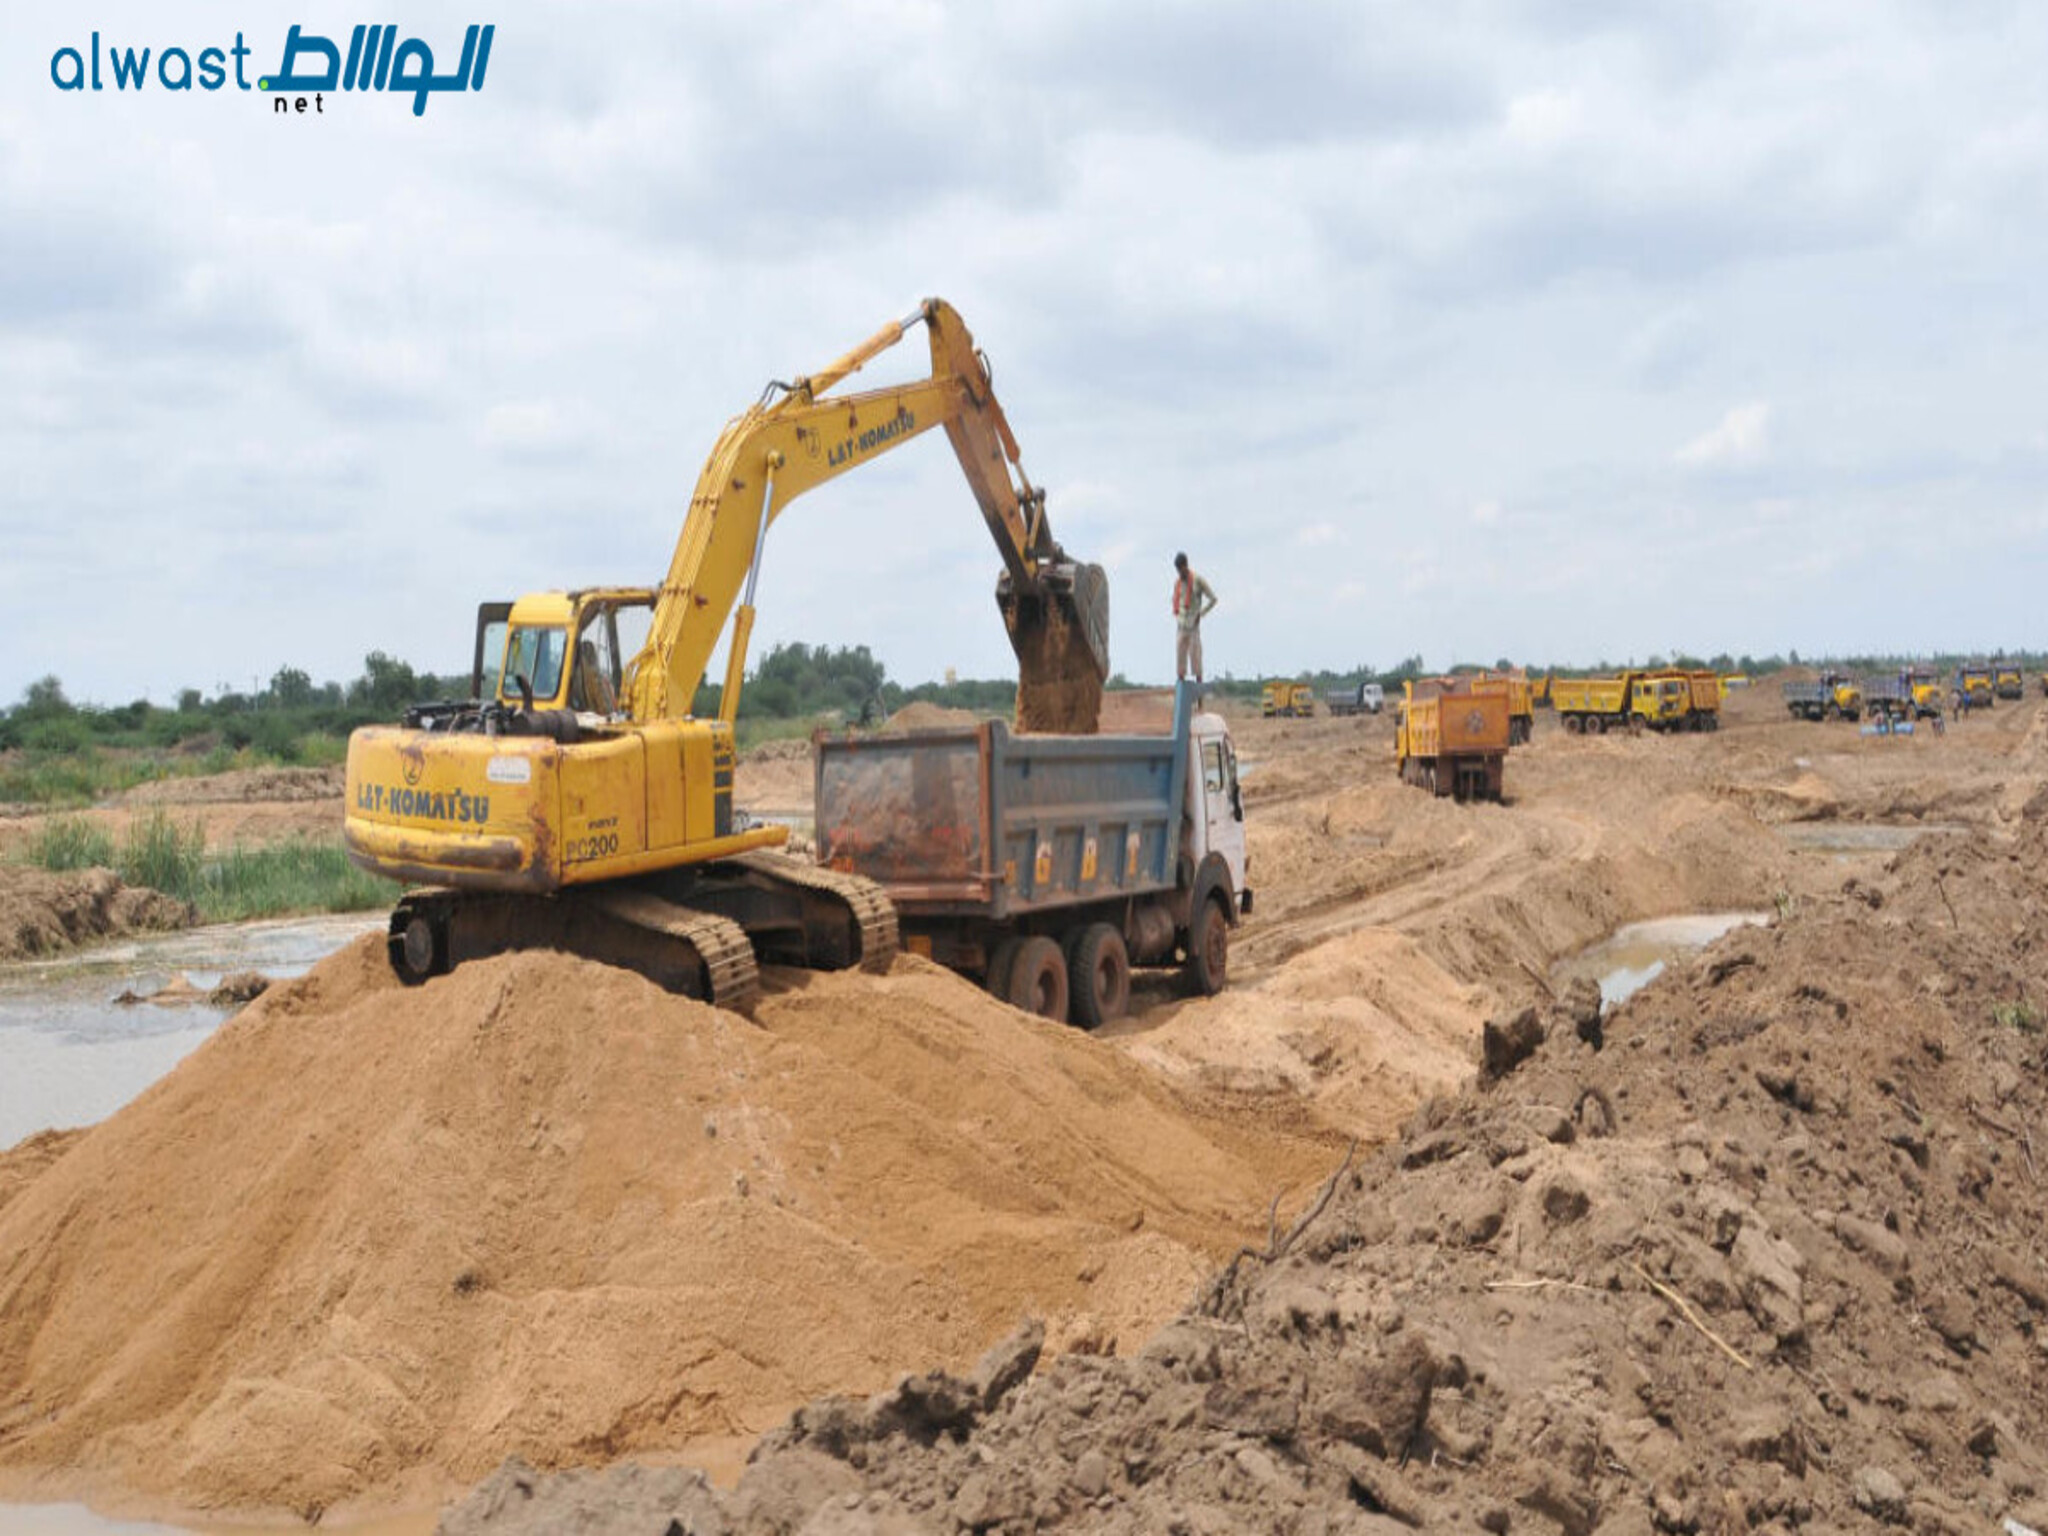 UAE fines Several trucks 3,000 Dirhams for illegally transporting sand